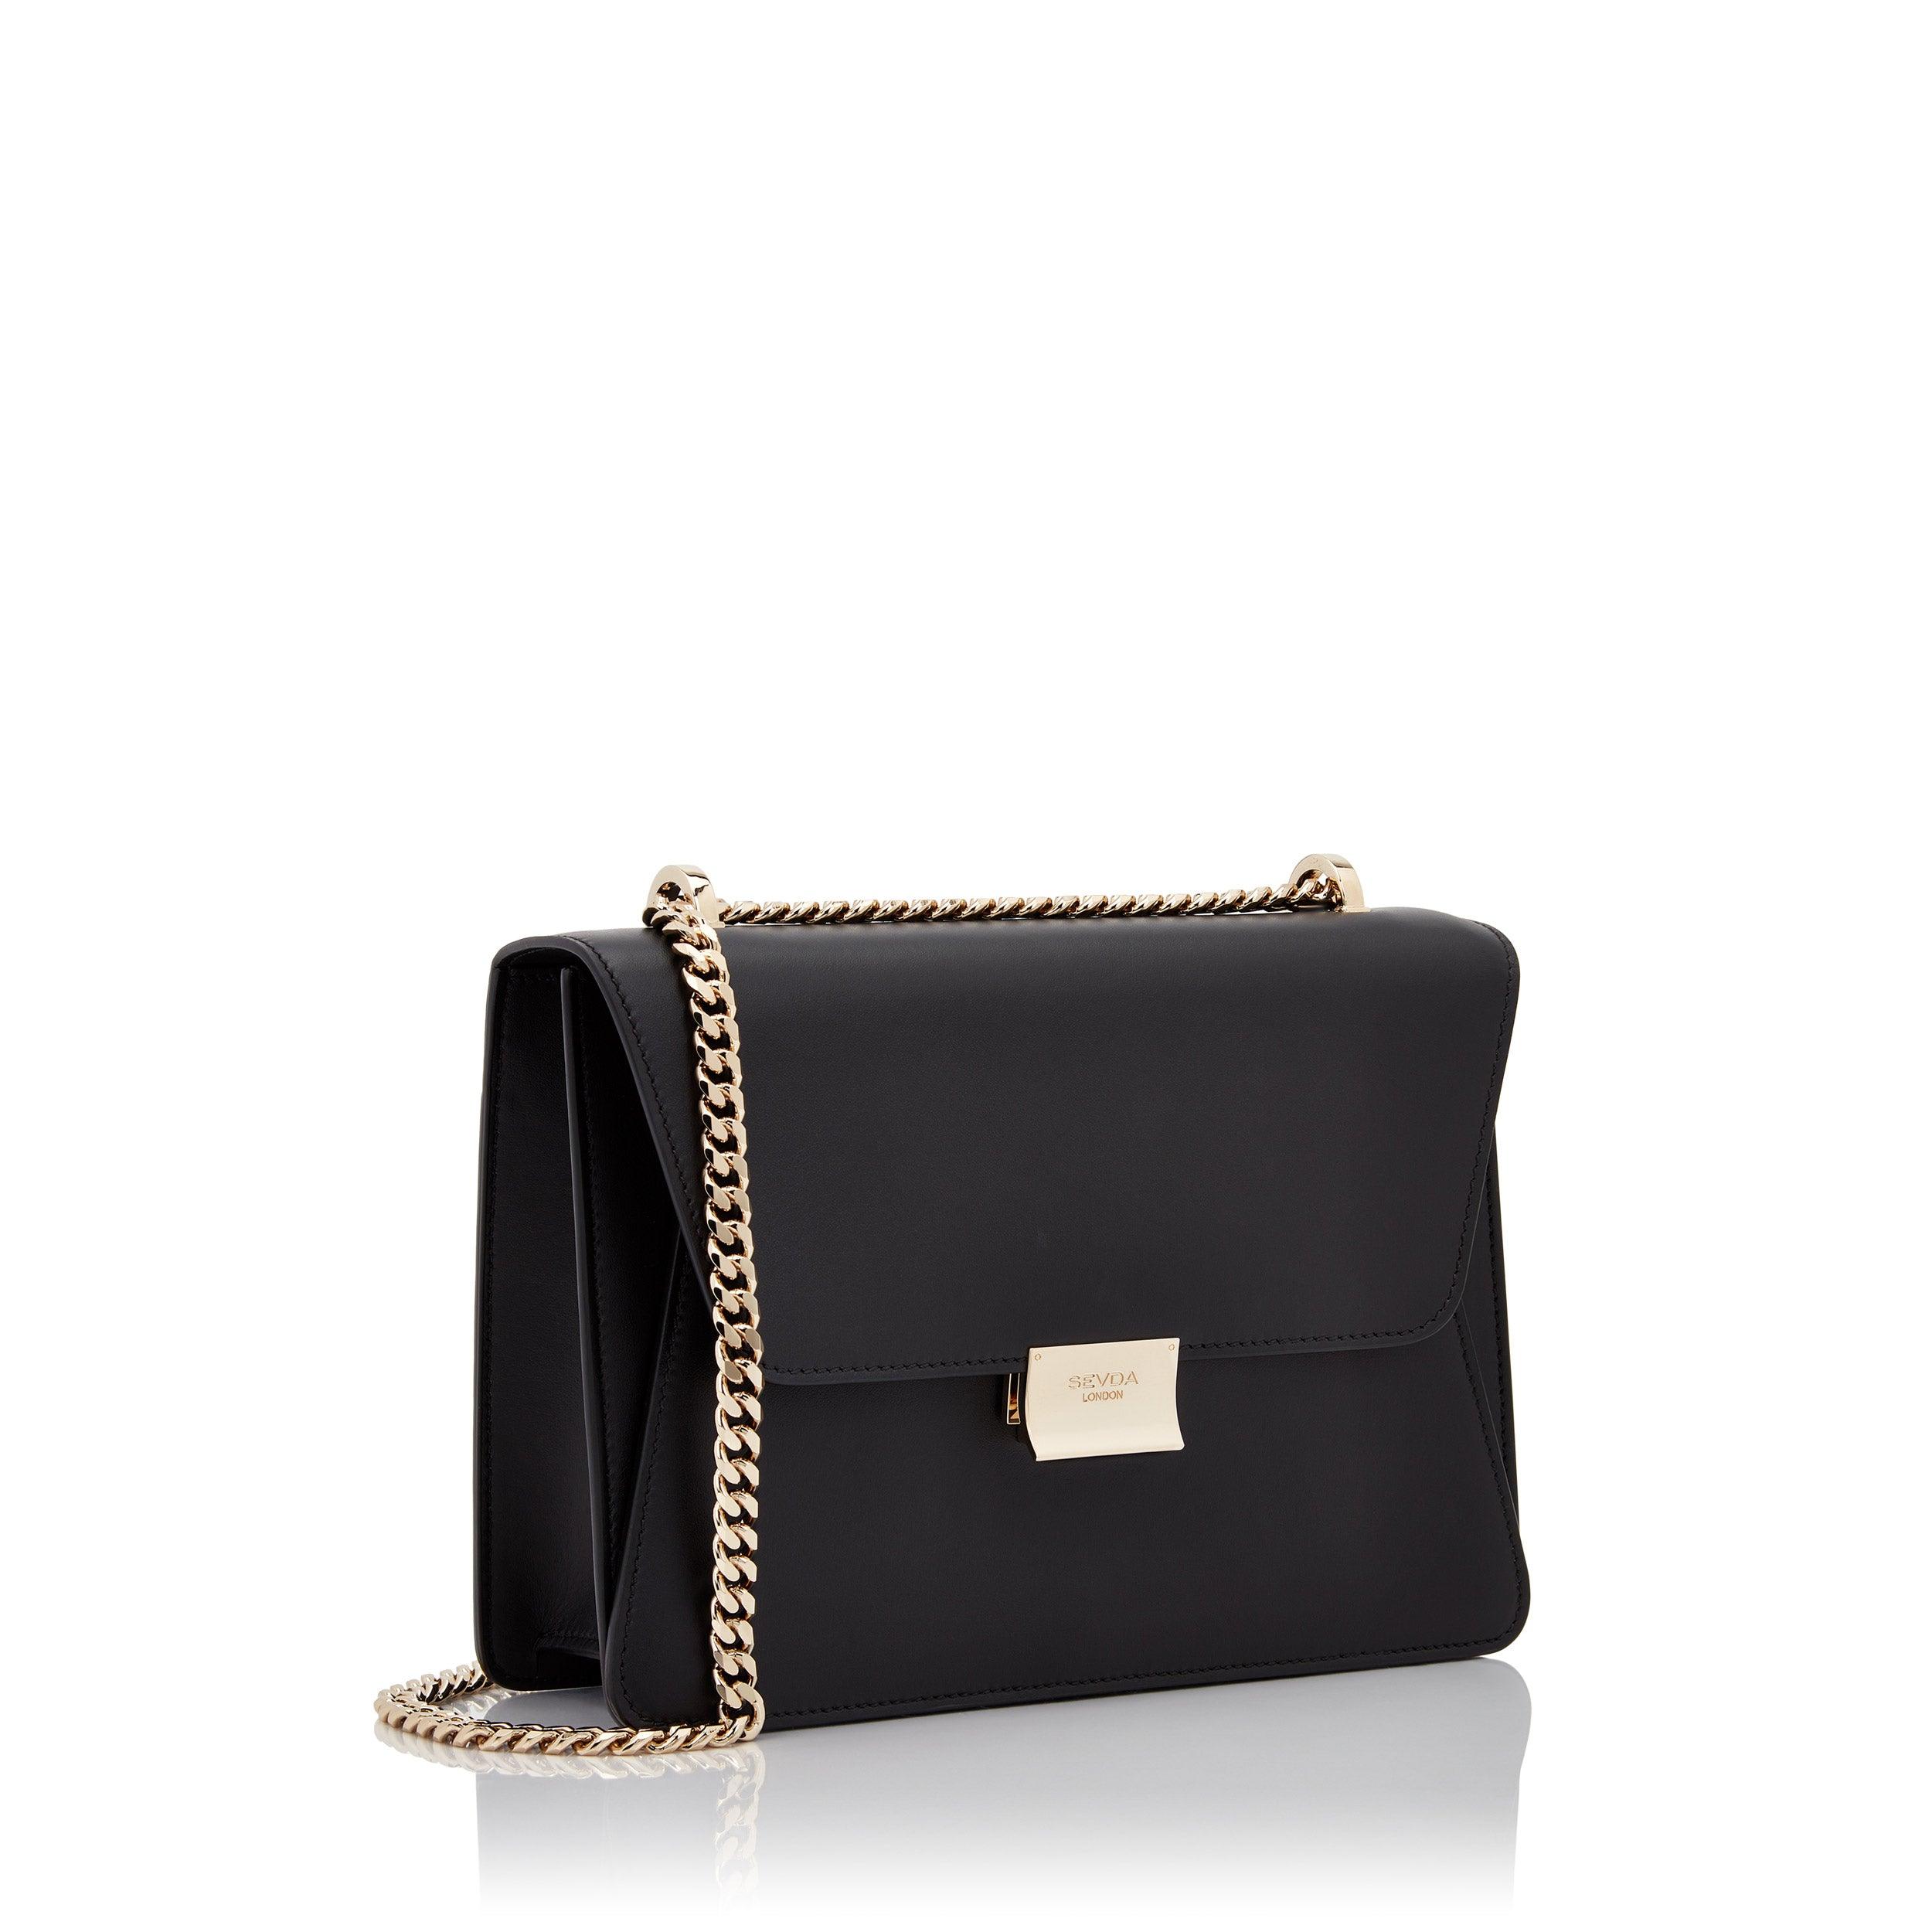 Black Designer Shoulder Bag with Gold Chain - Where London fashion meets Italian craftsmanship.